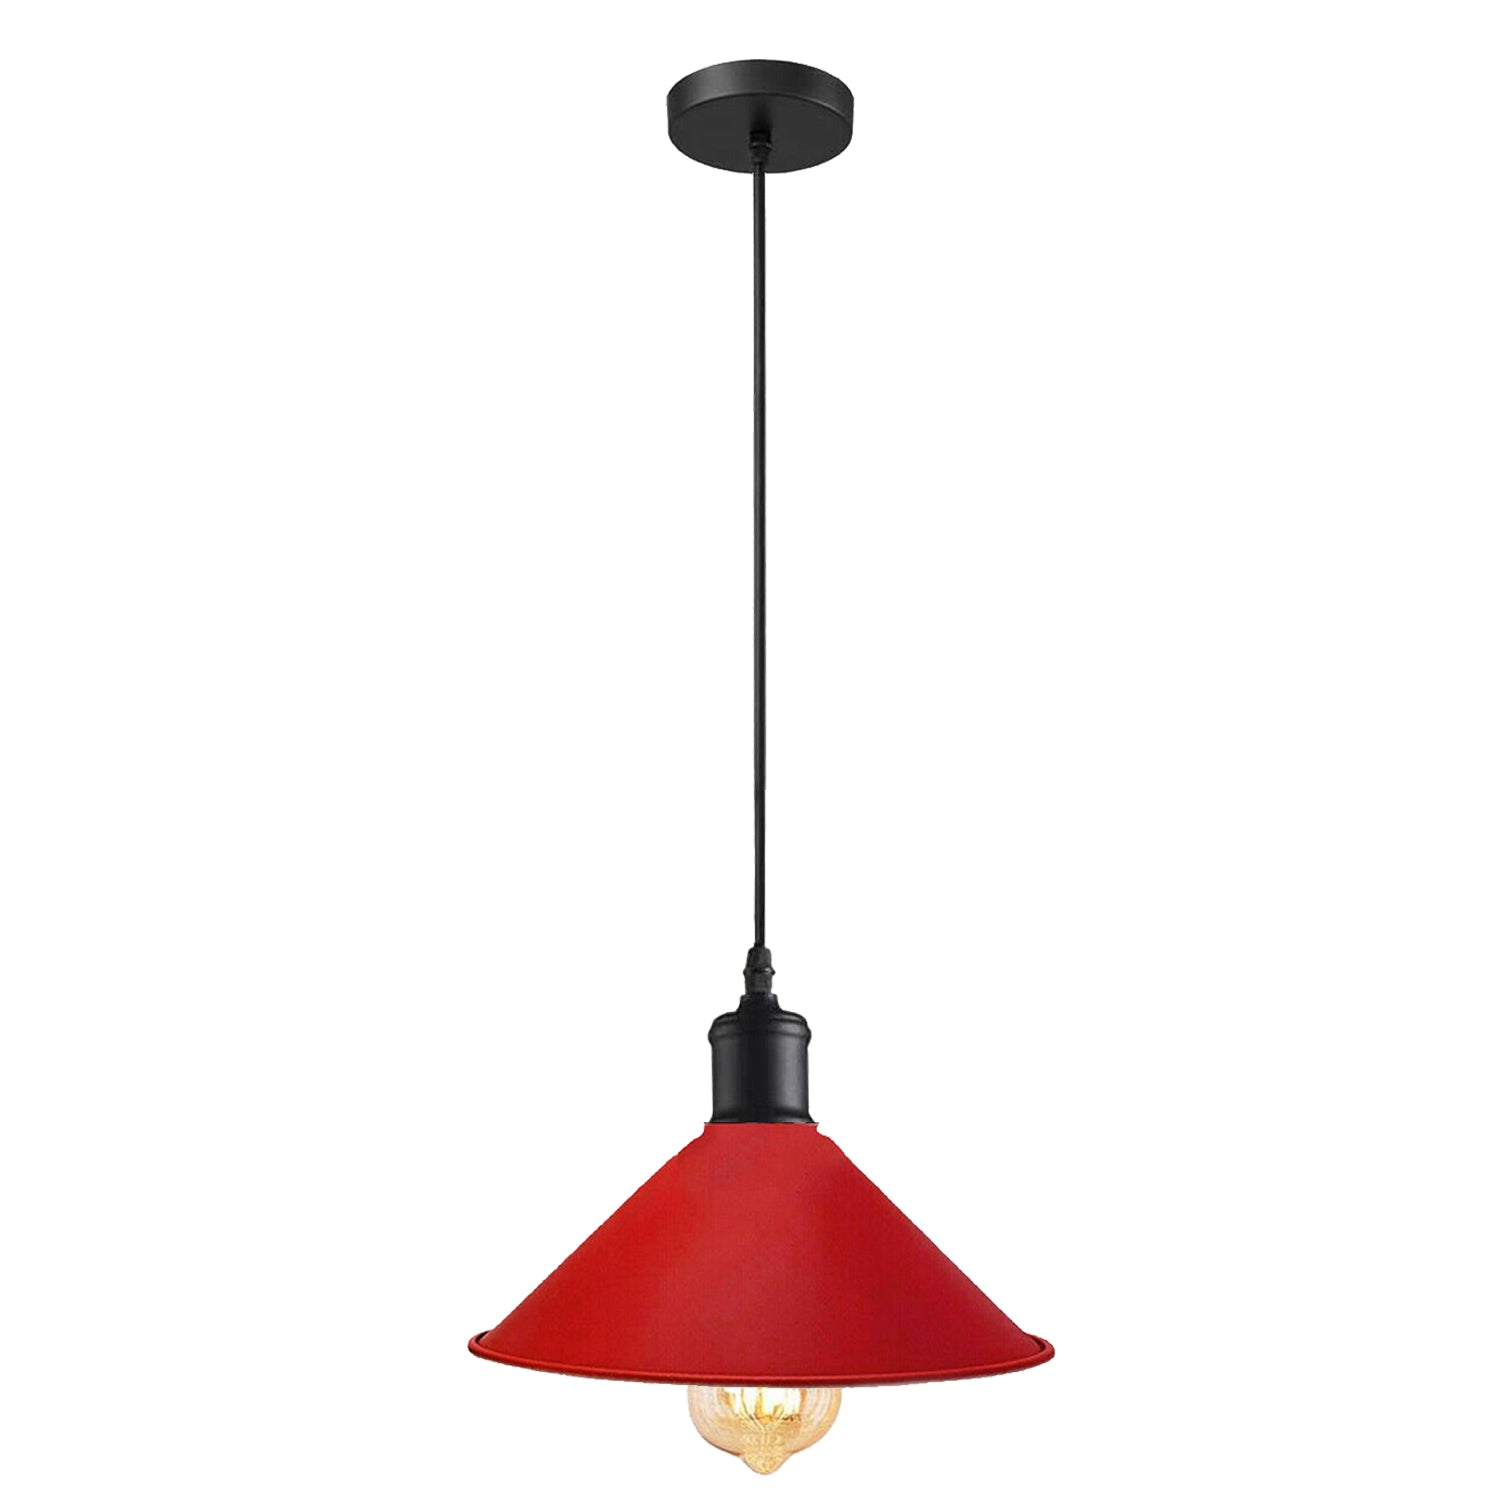 Rot-Industrie Vintage Lampe Retro Deckenlampe Pendelleuchte Kronleuchter E27 Edison